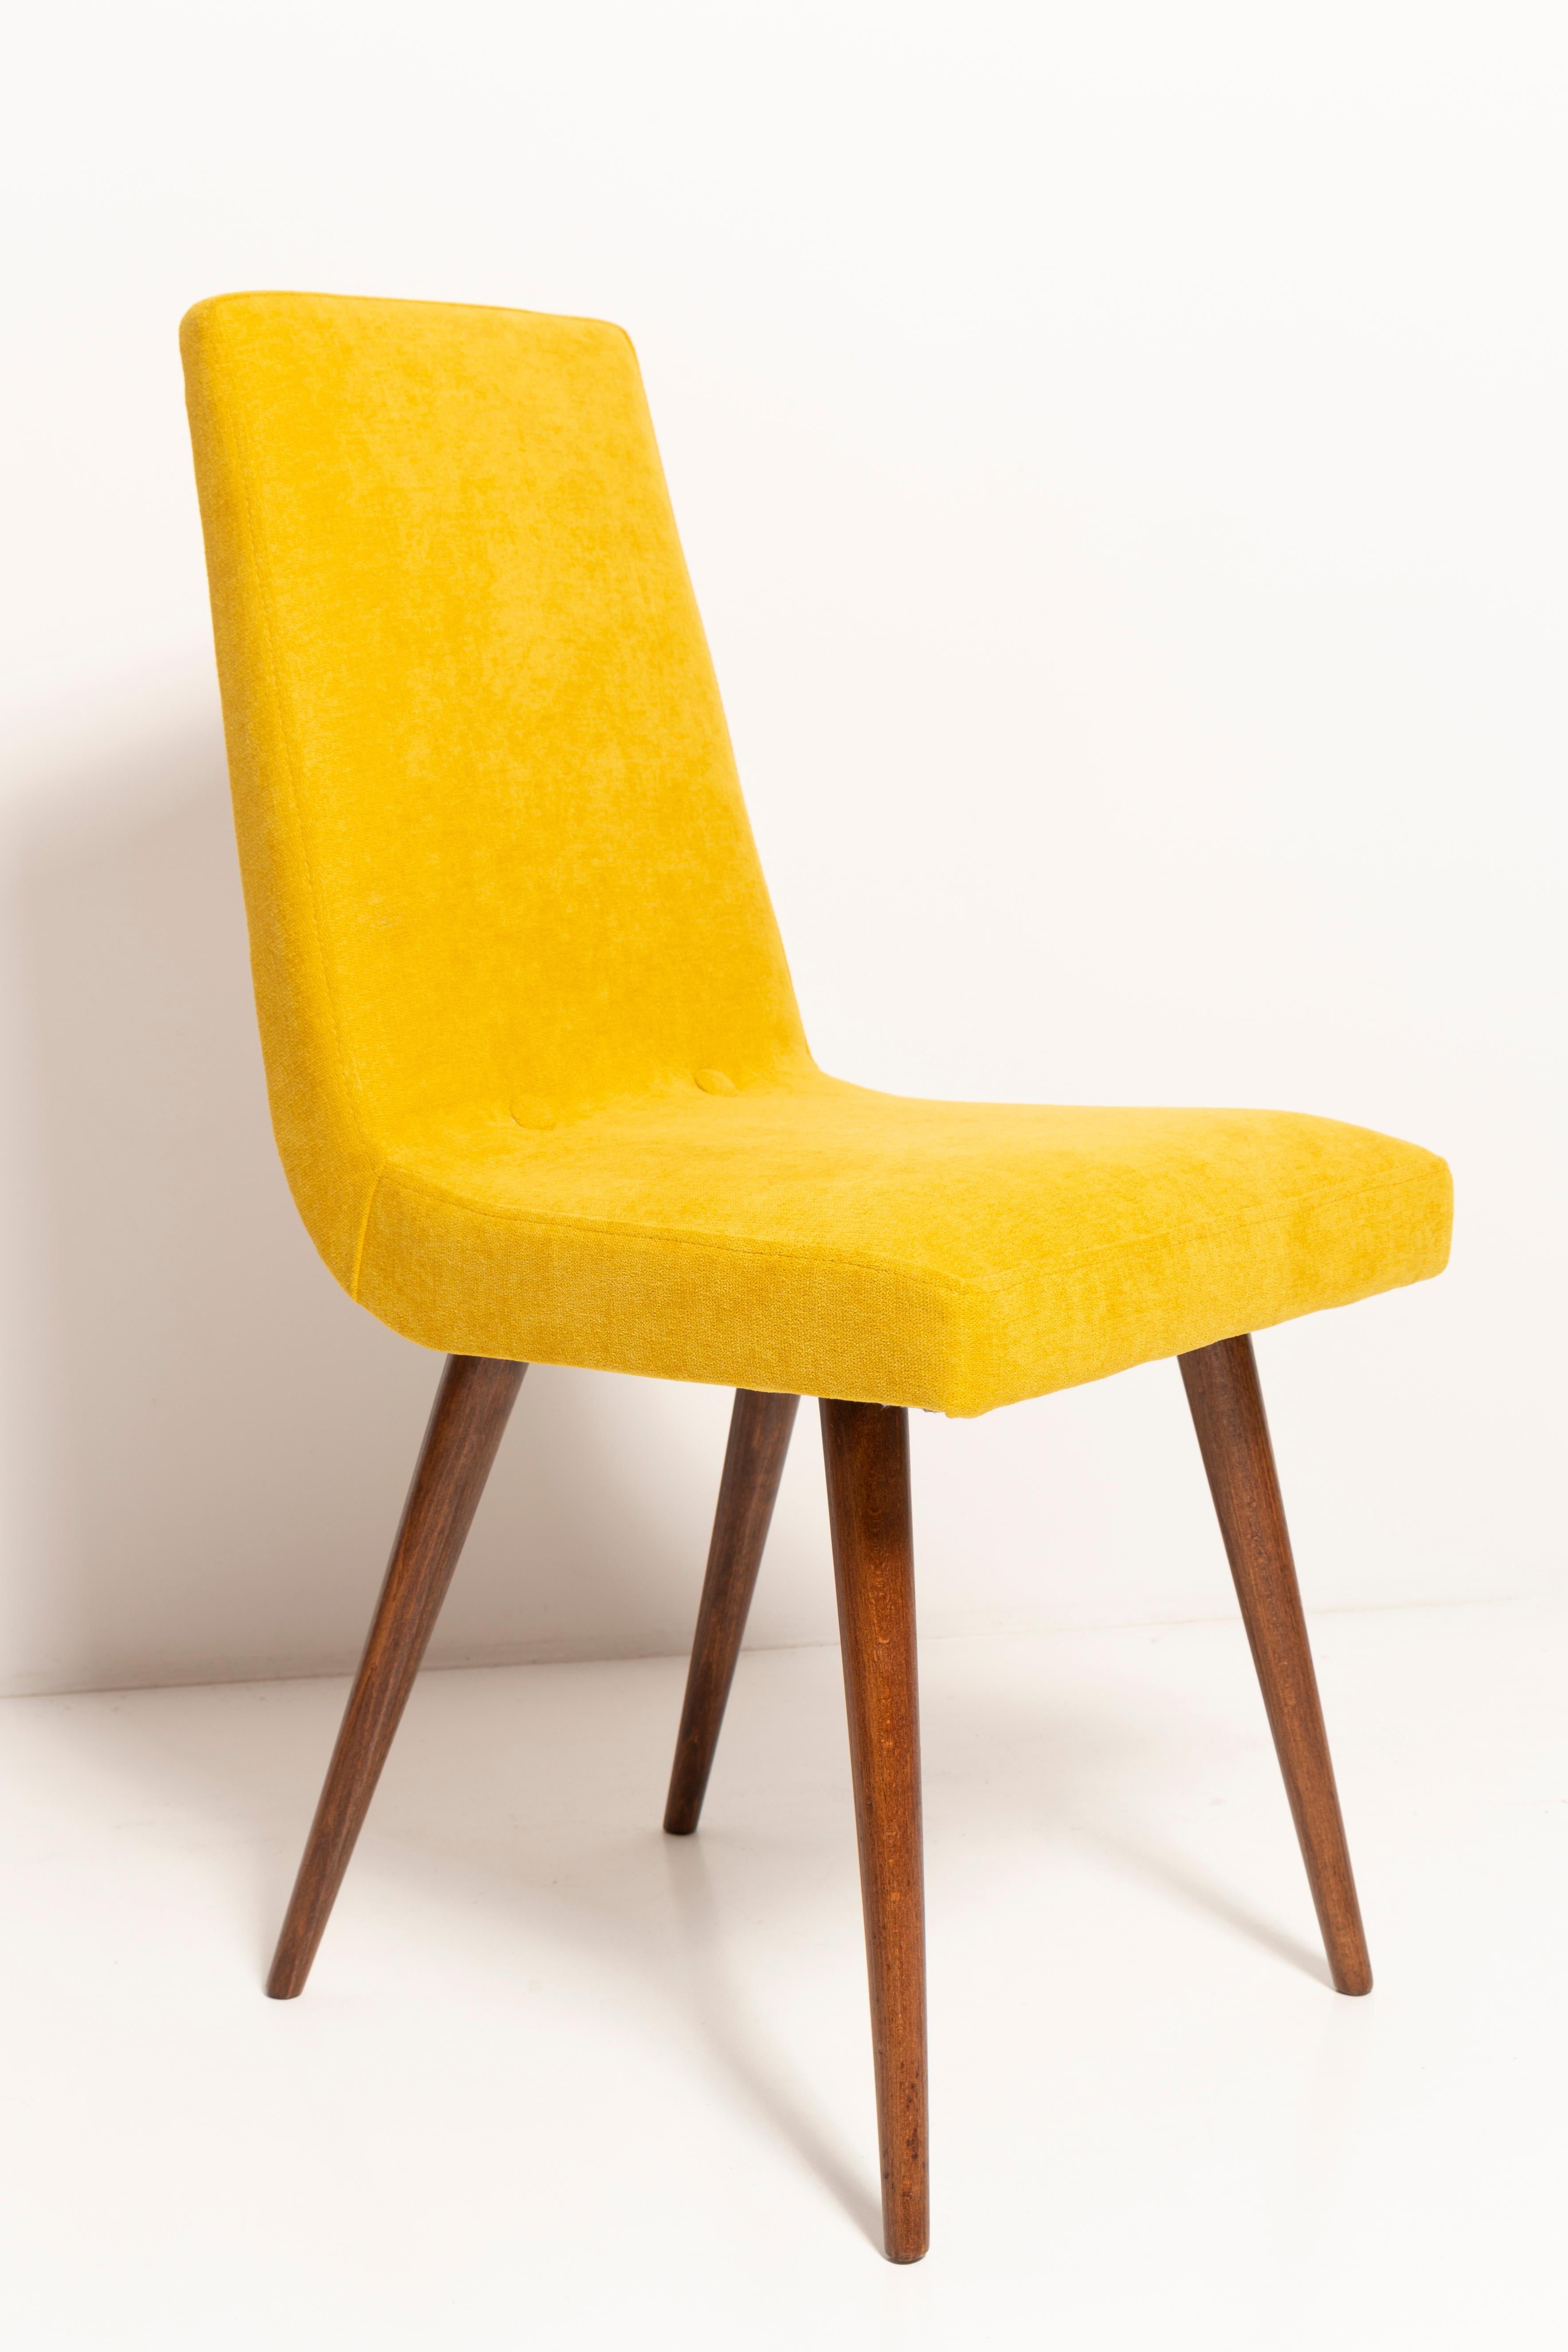 Polish Set of Eight 20th Century Mustard Yellow Wool Chair, Rajmund Halas Europe, 1960s For Sale